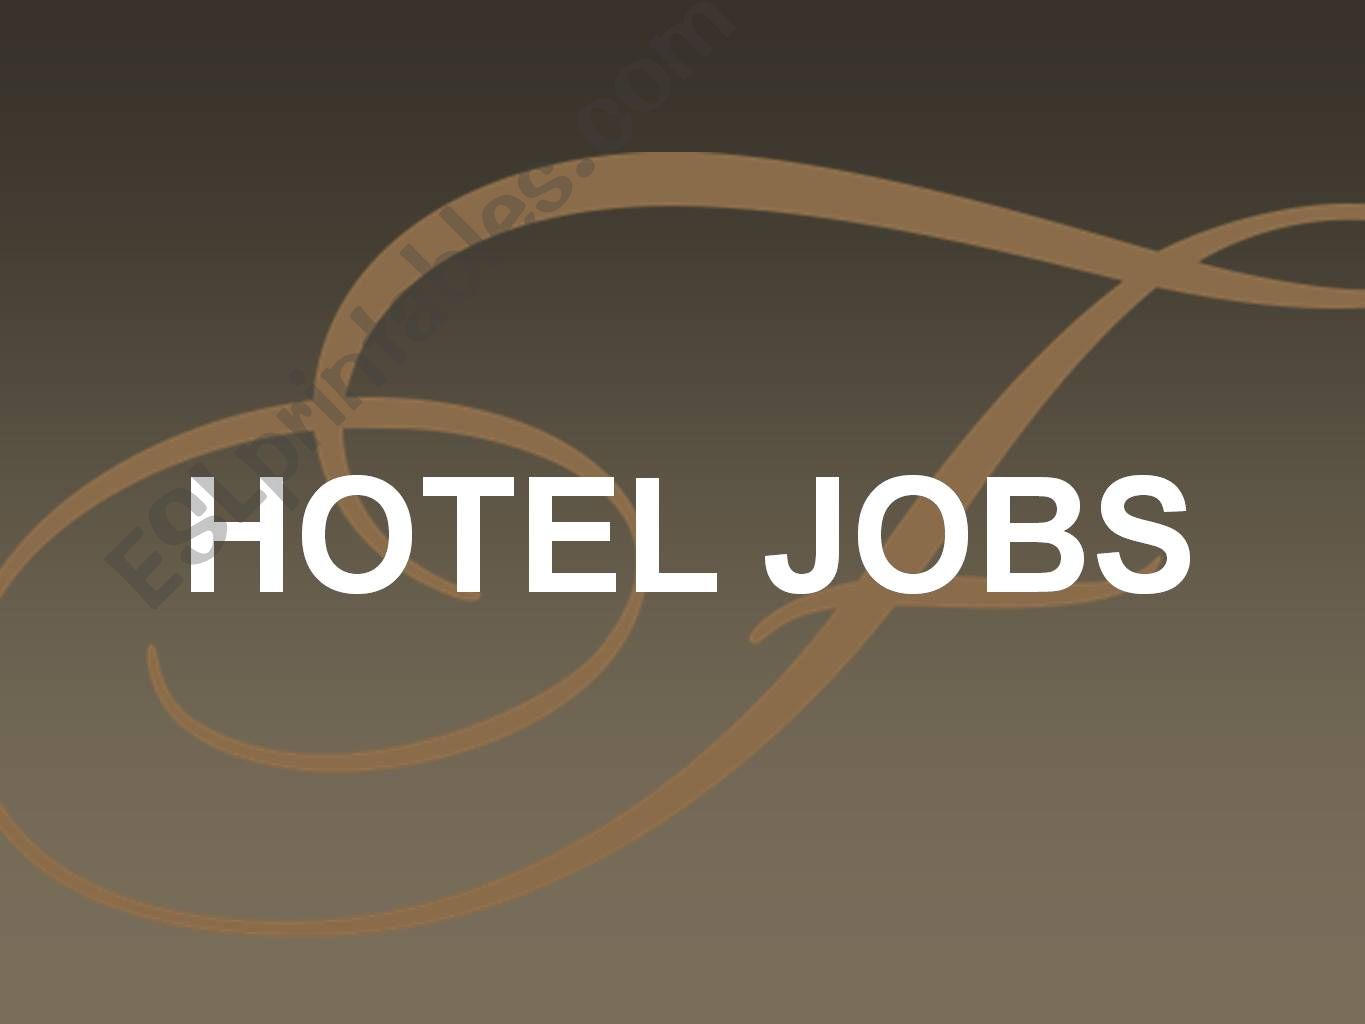 Hotel jobs 1 powerpoint